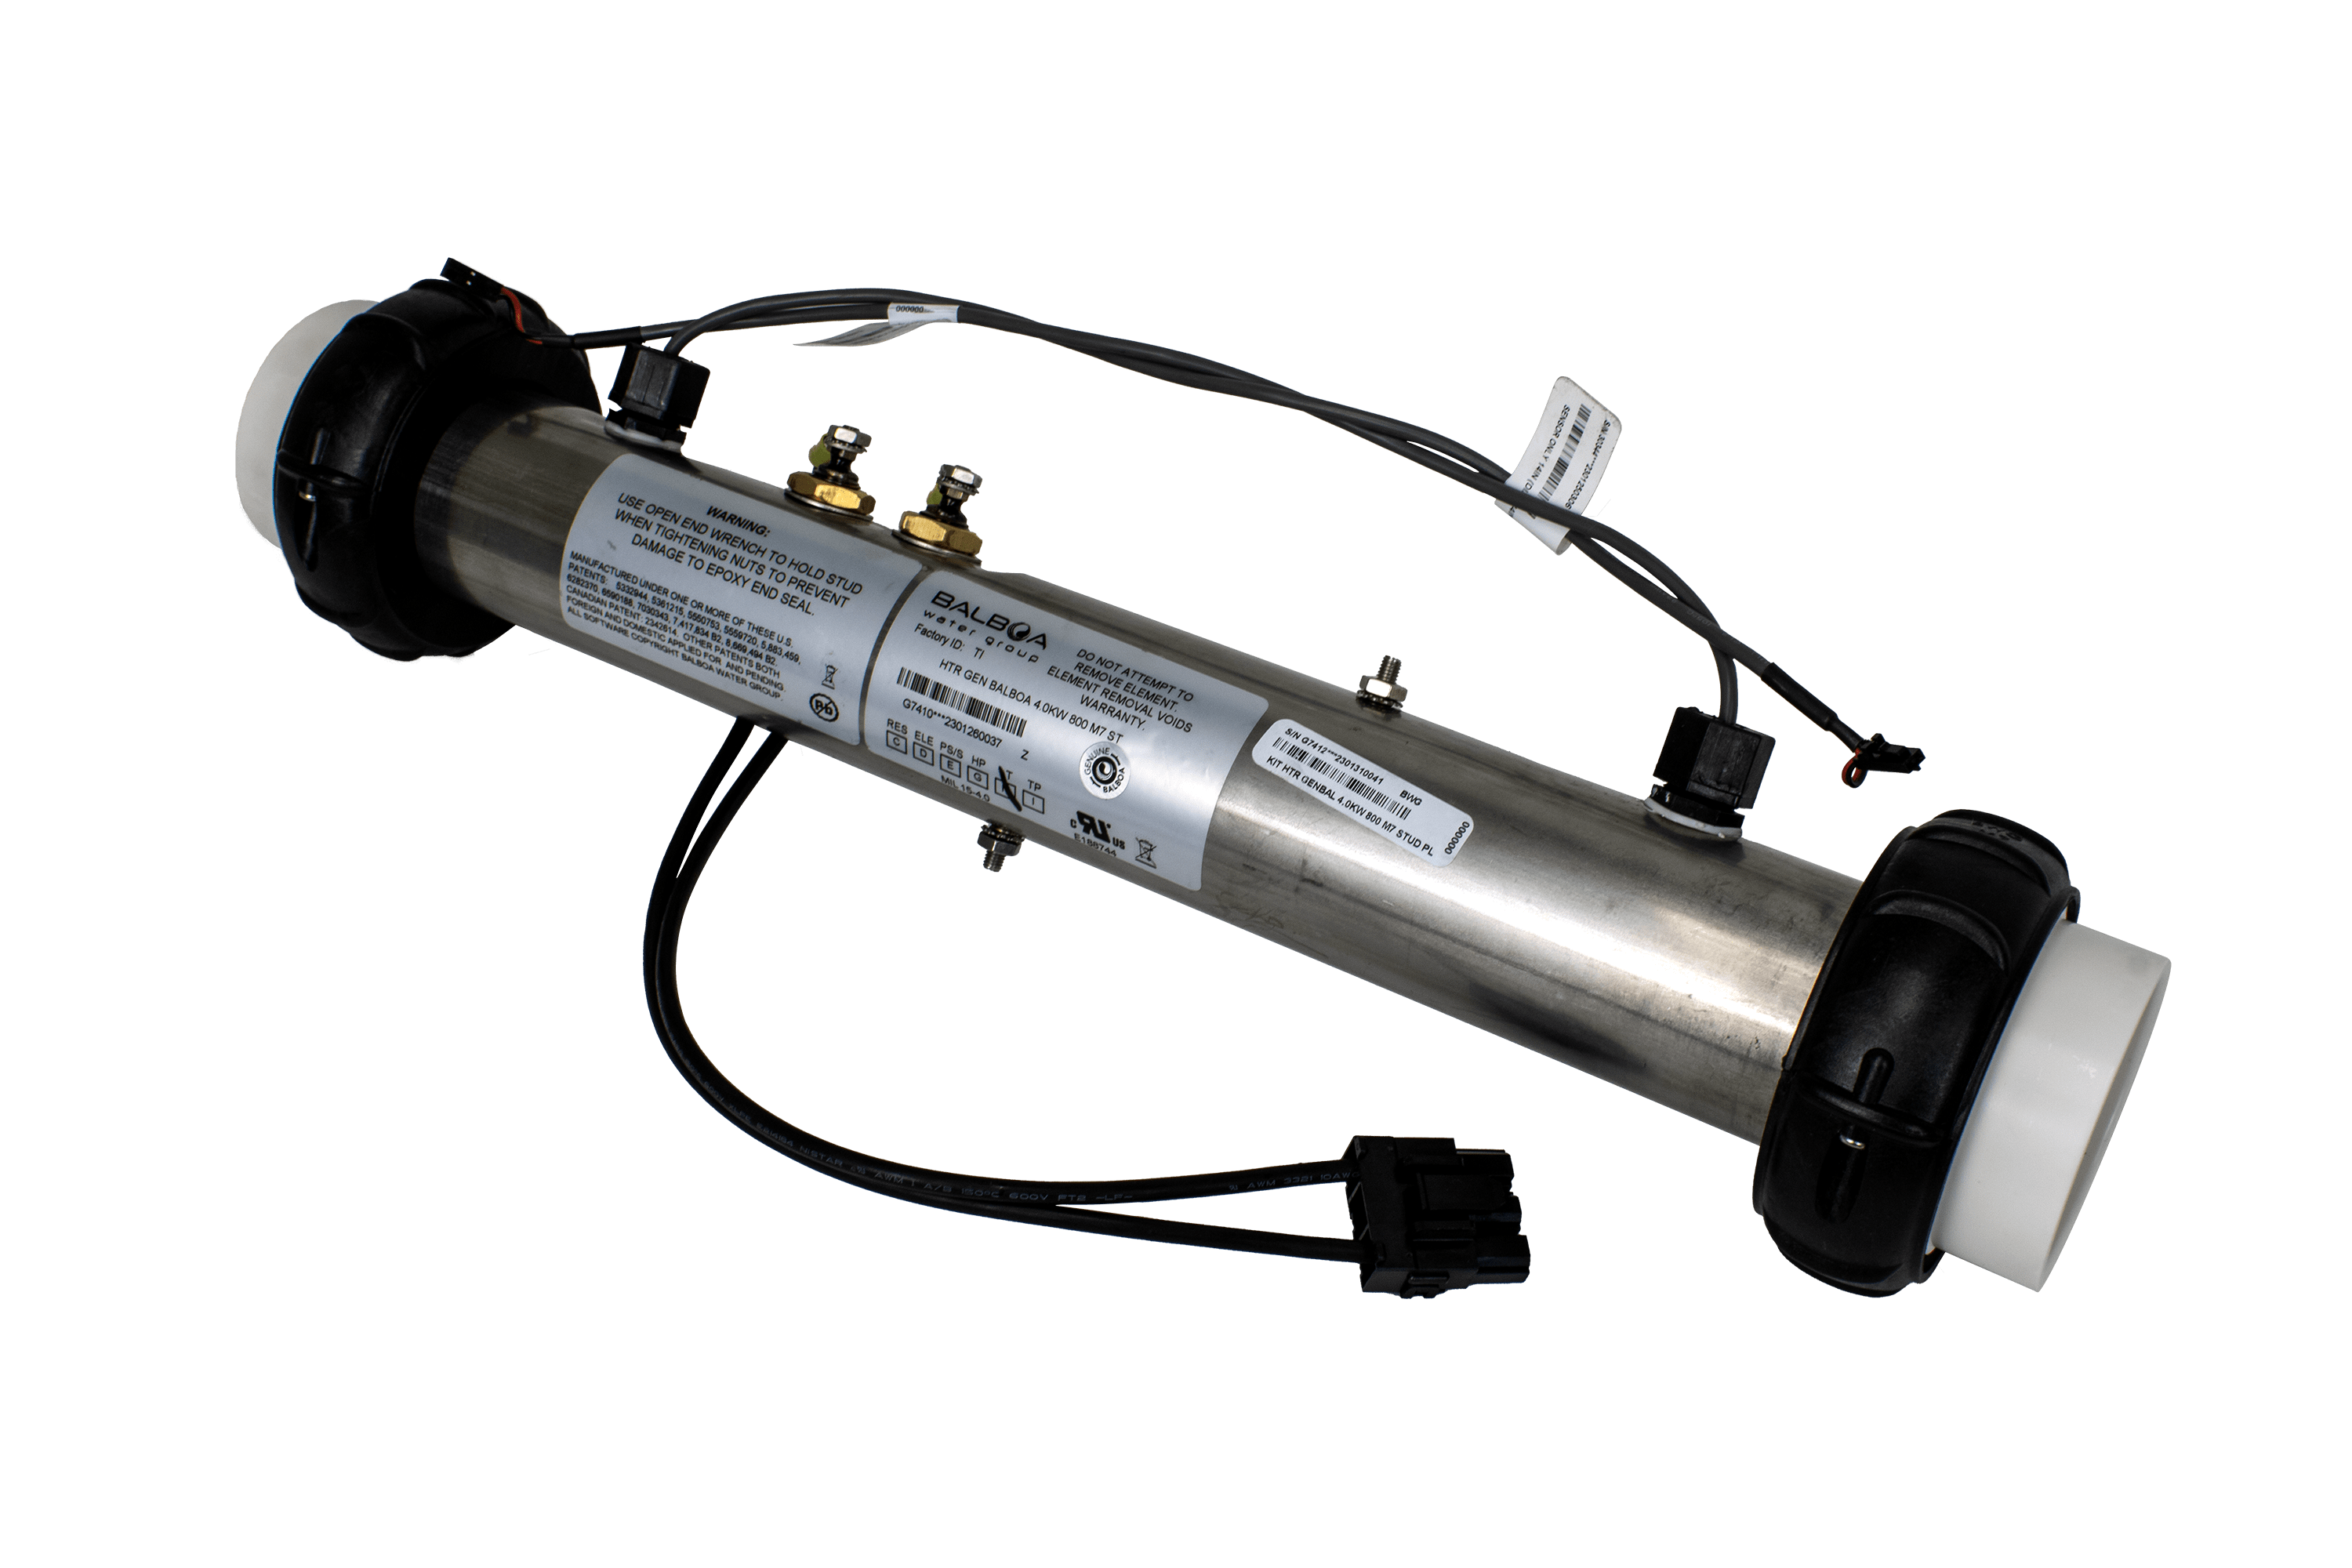 Balboa 4 Kw Heater Tube assembly with sensors PN 58104R16